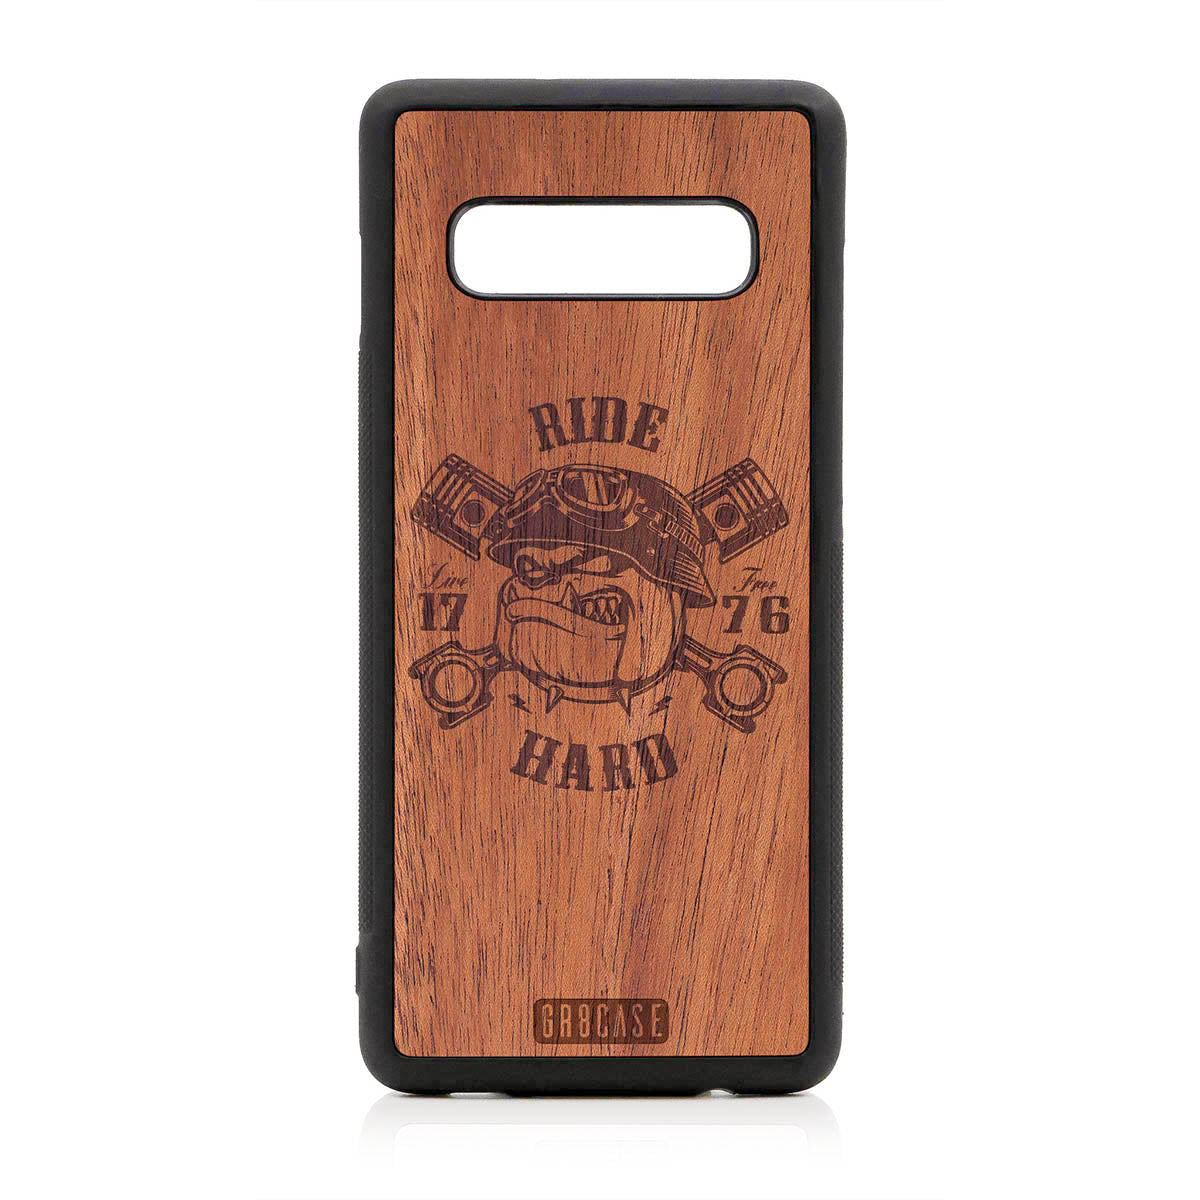 Ride Hard Live Free (Biker Dog) Design Wood Case For Samsung Galaxy S10 Plus by GR8CASE